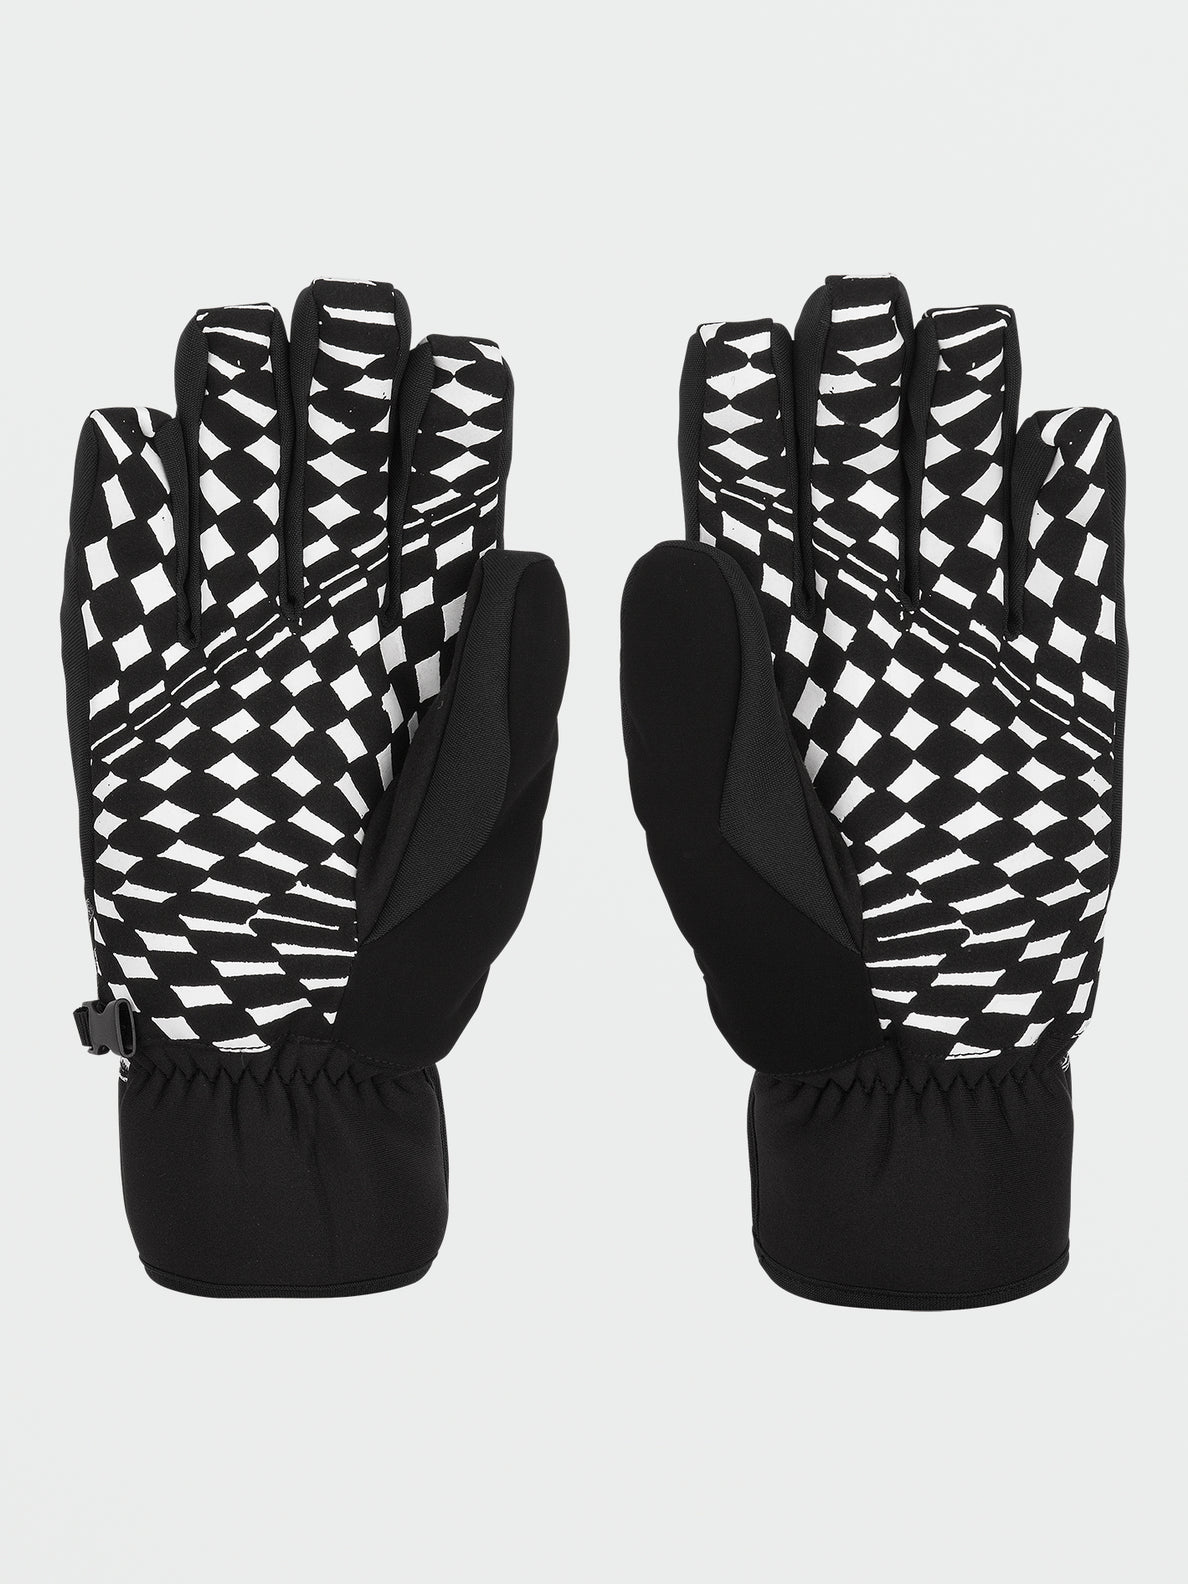 Mens V.Co Nyle Glove - Black White